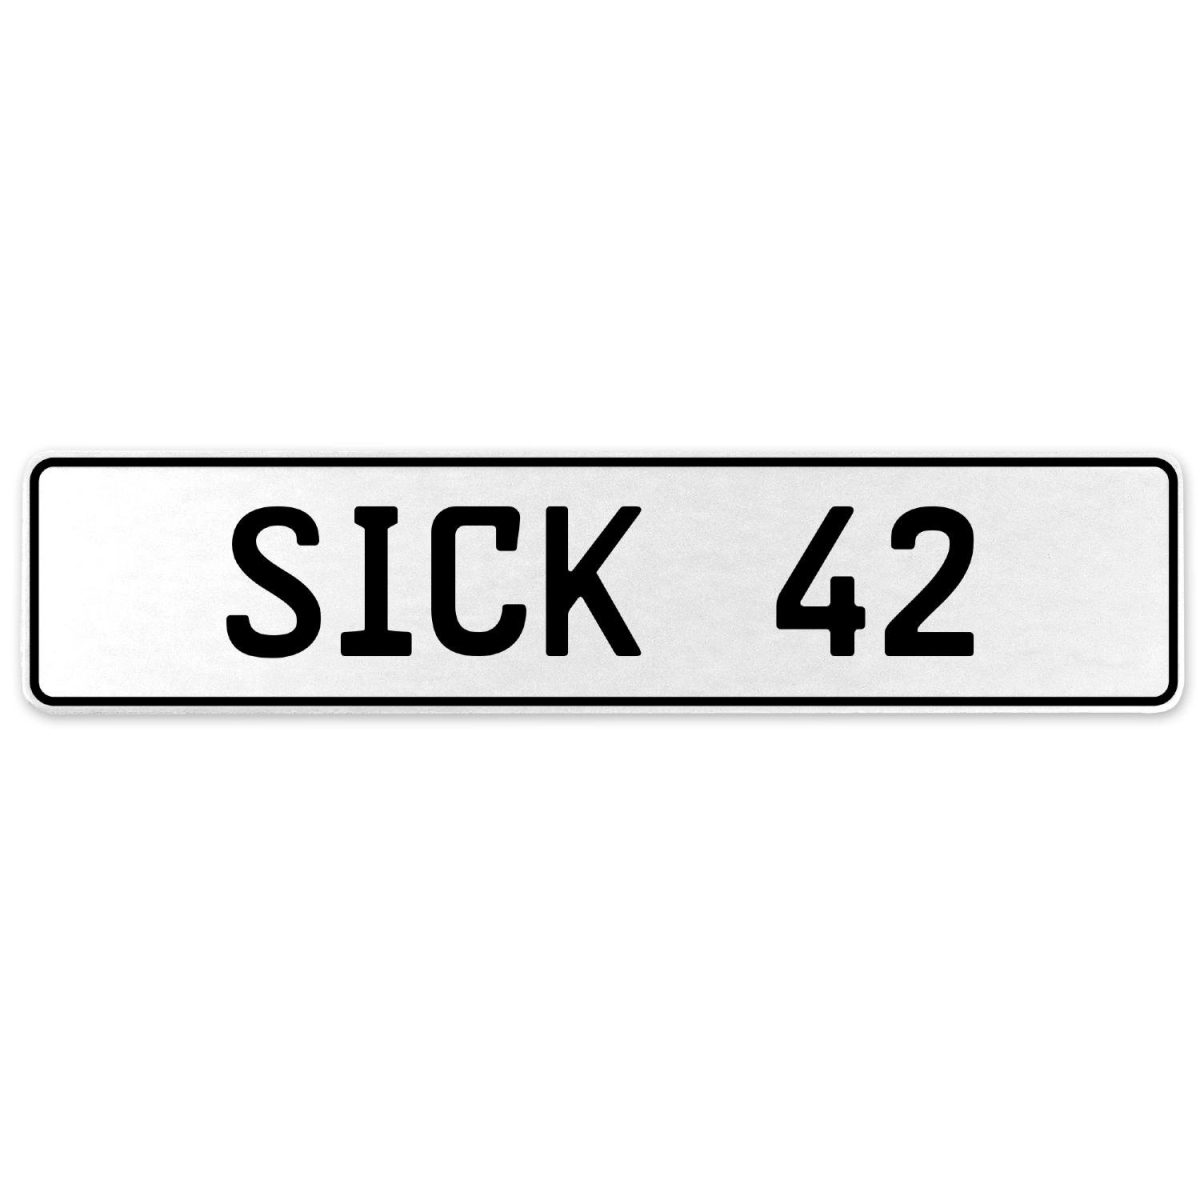 554342 Sick 42 - White Aluminum Street Sign Mancave Euro Plate Name Door Sign Wall